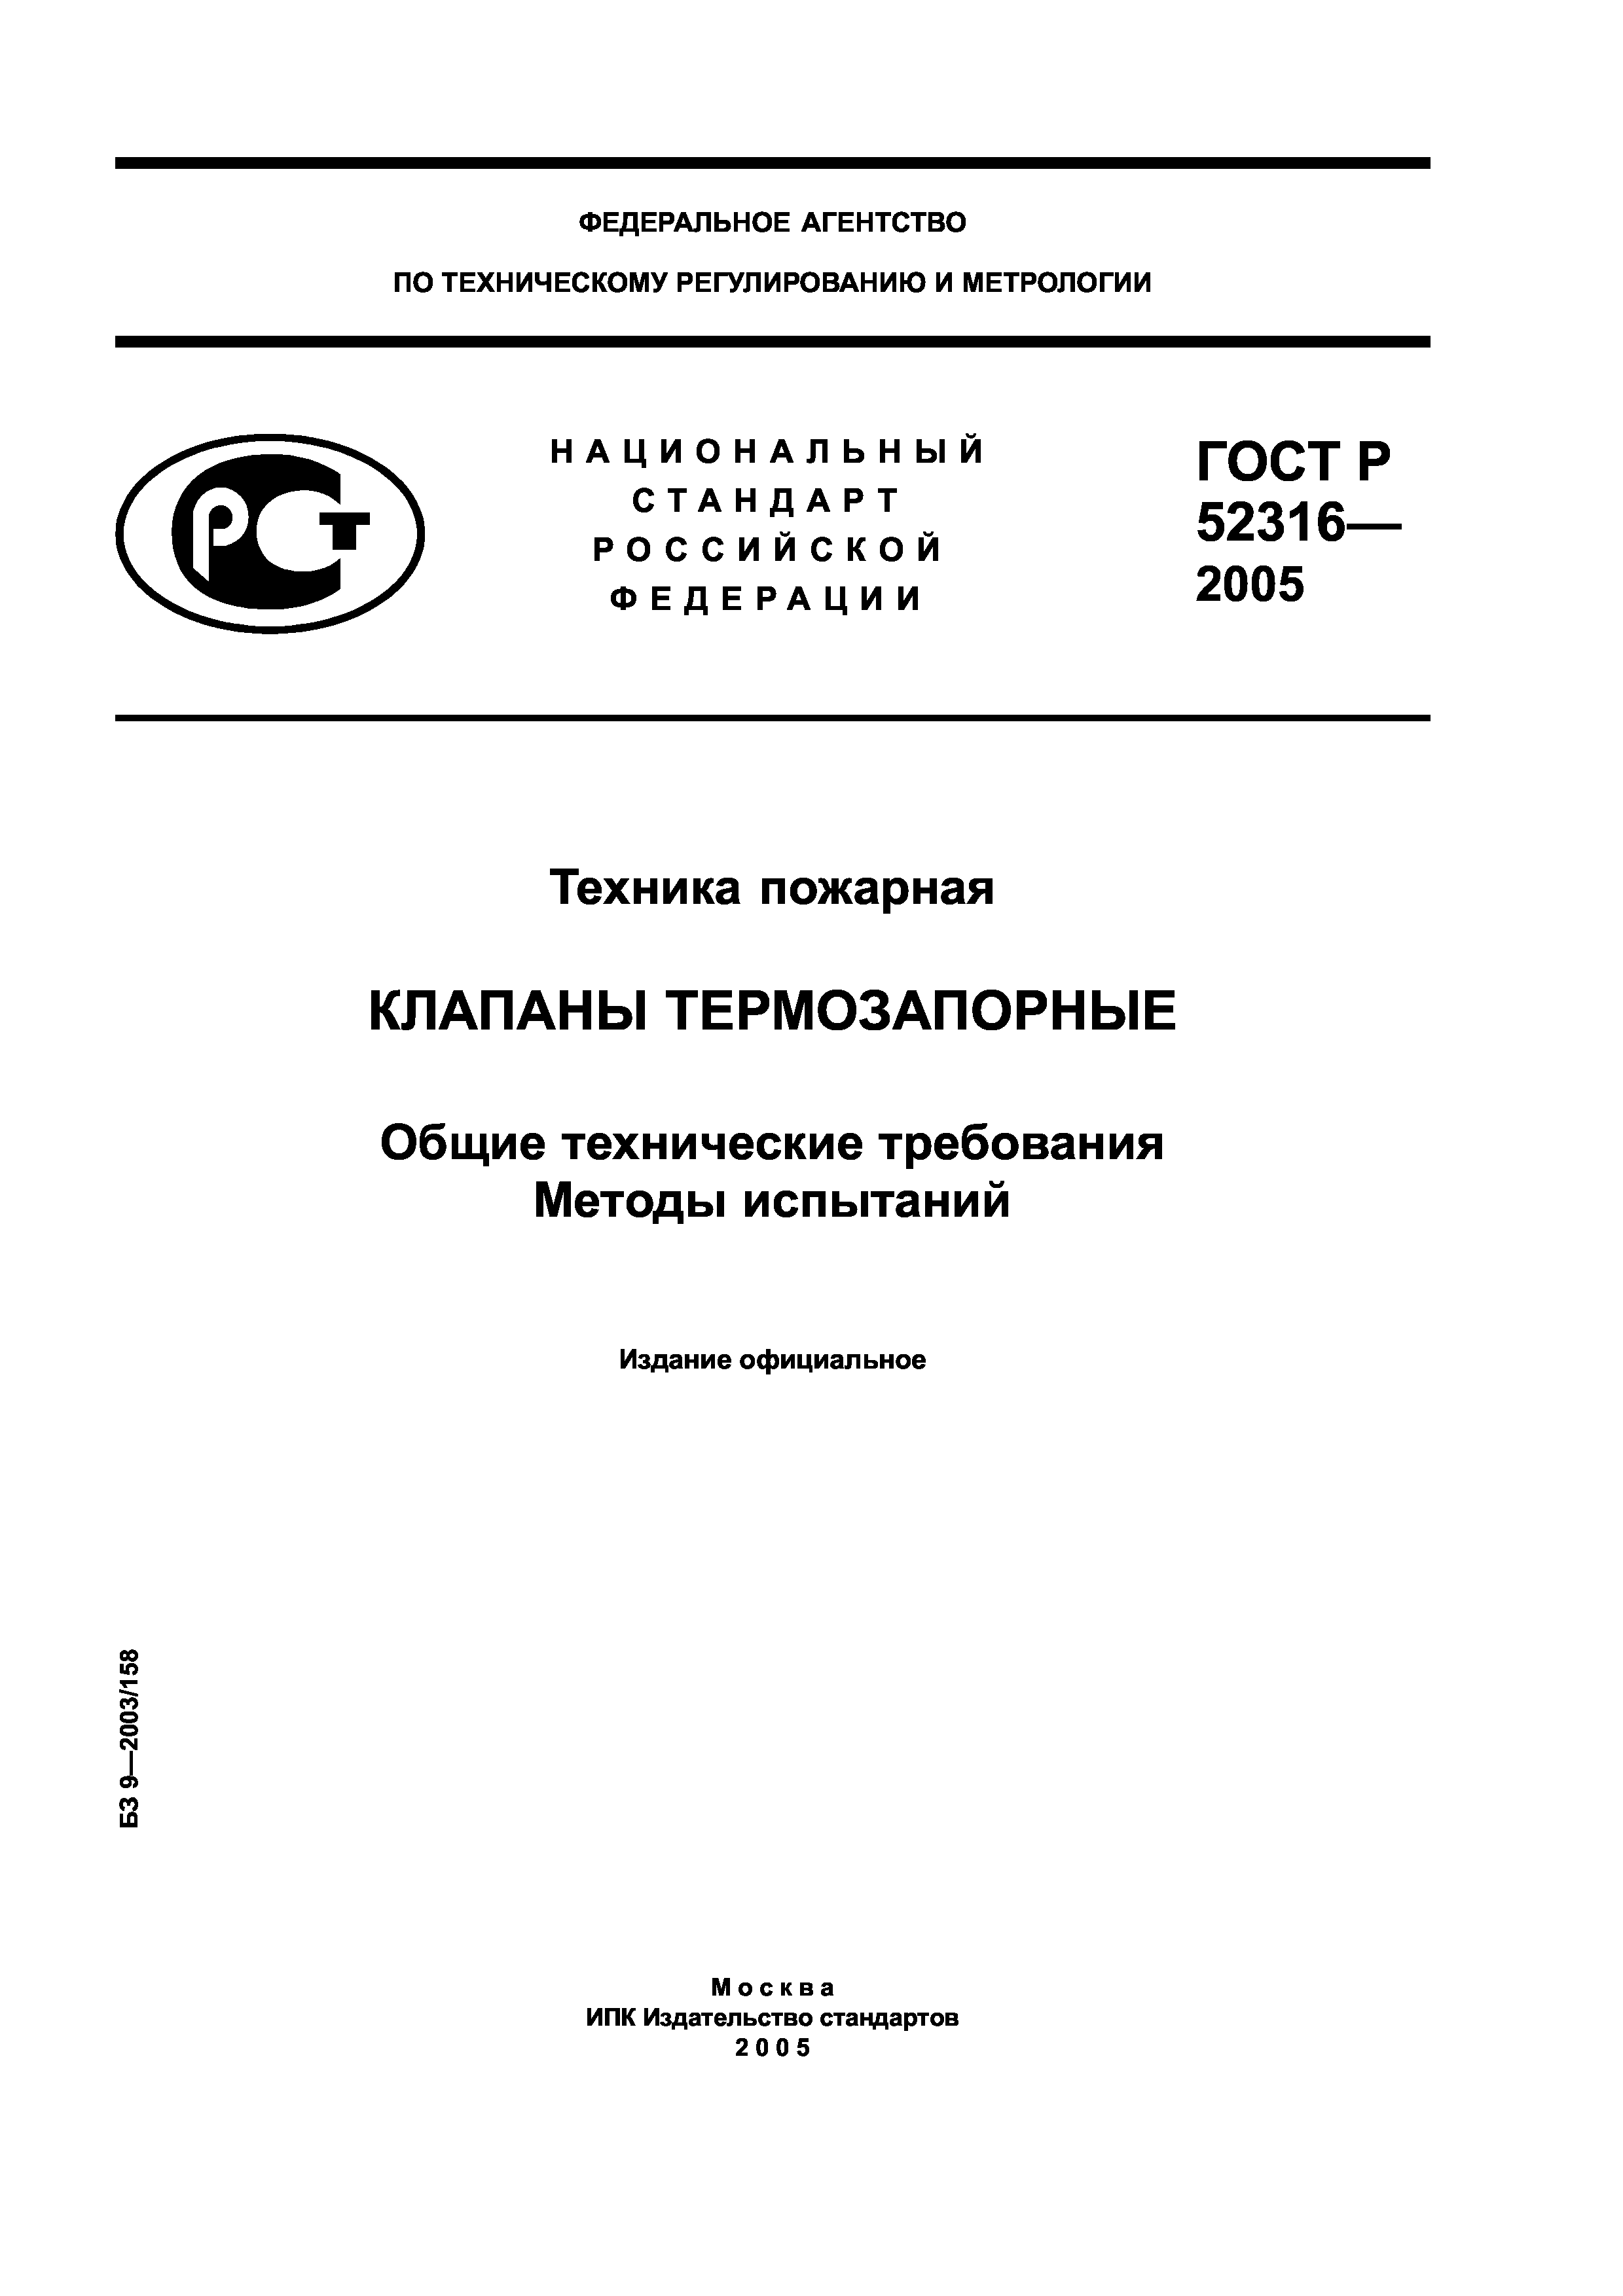 ГОСТ Р 52316-2005